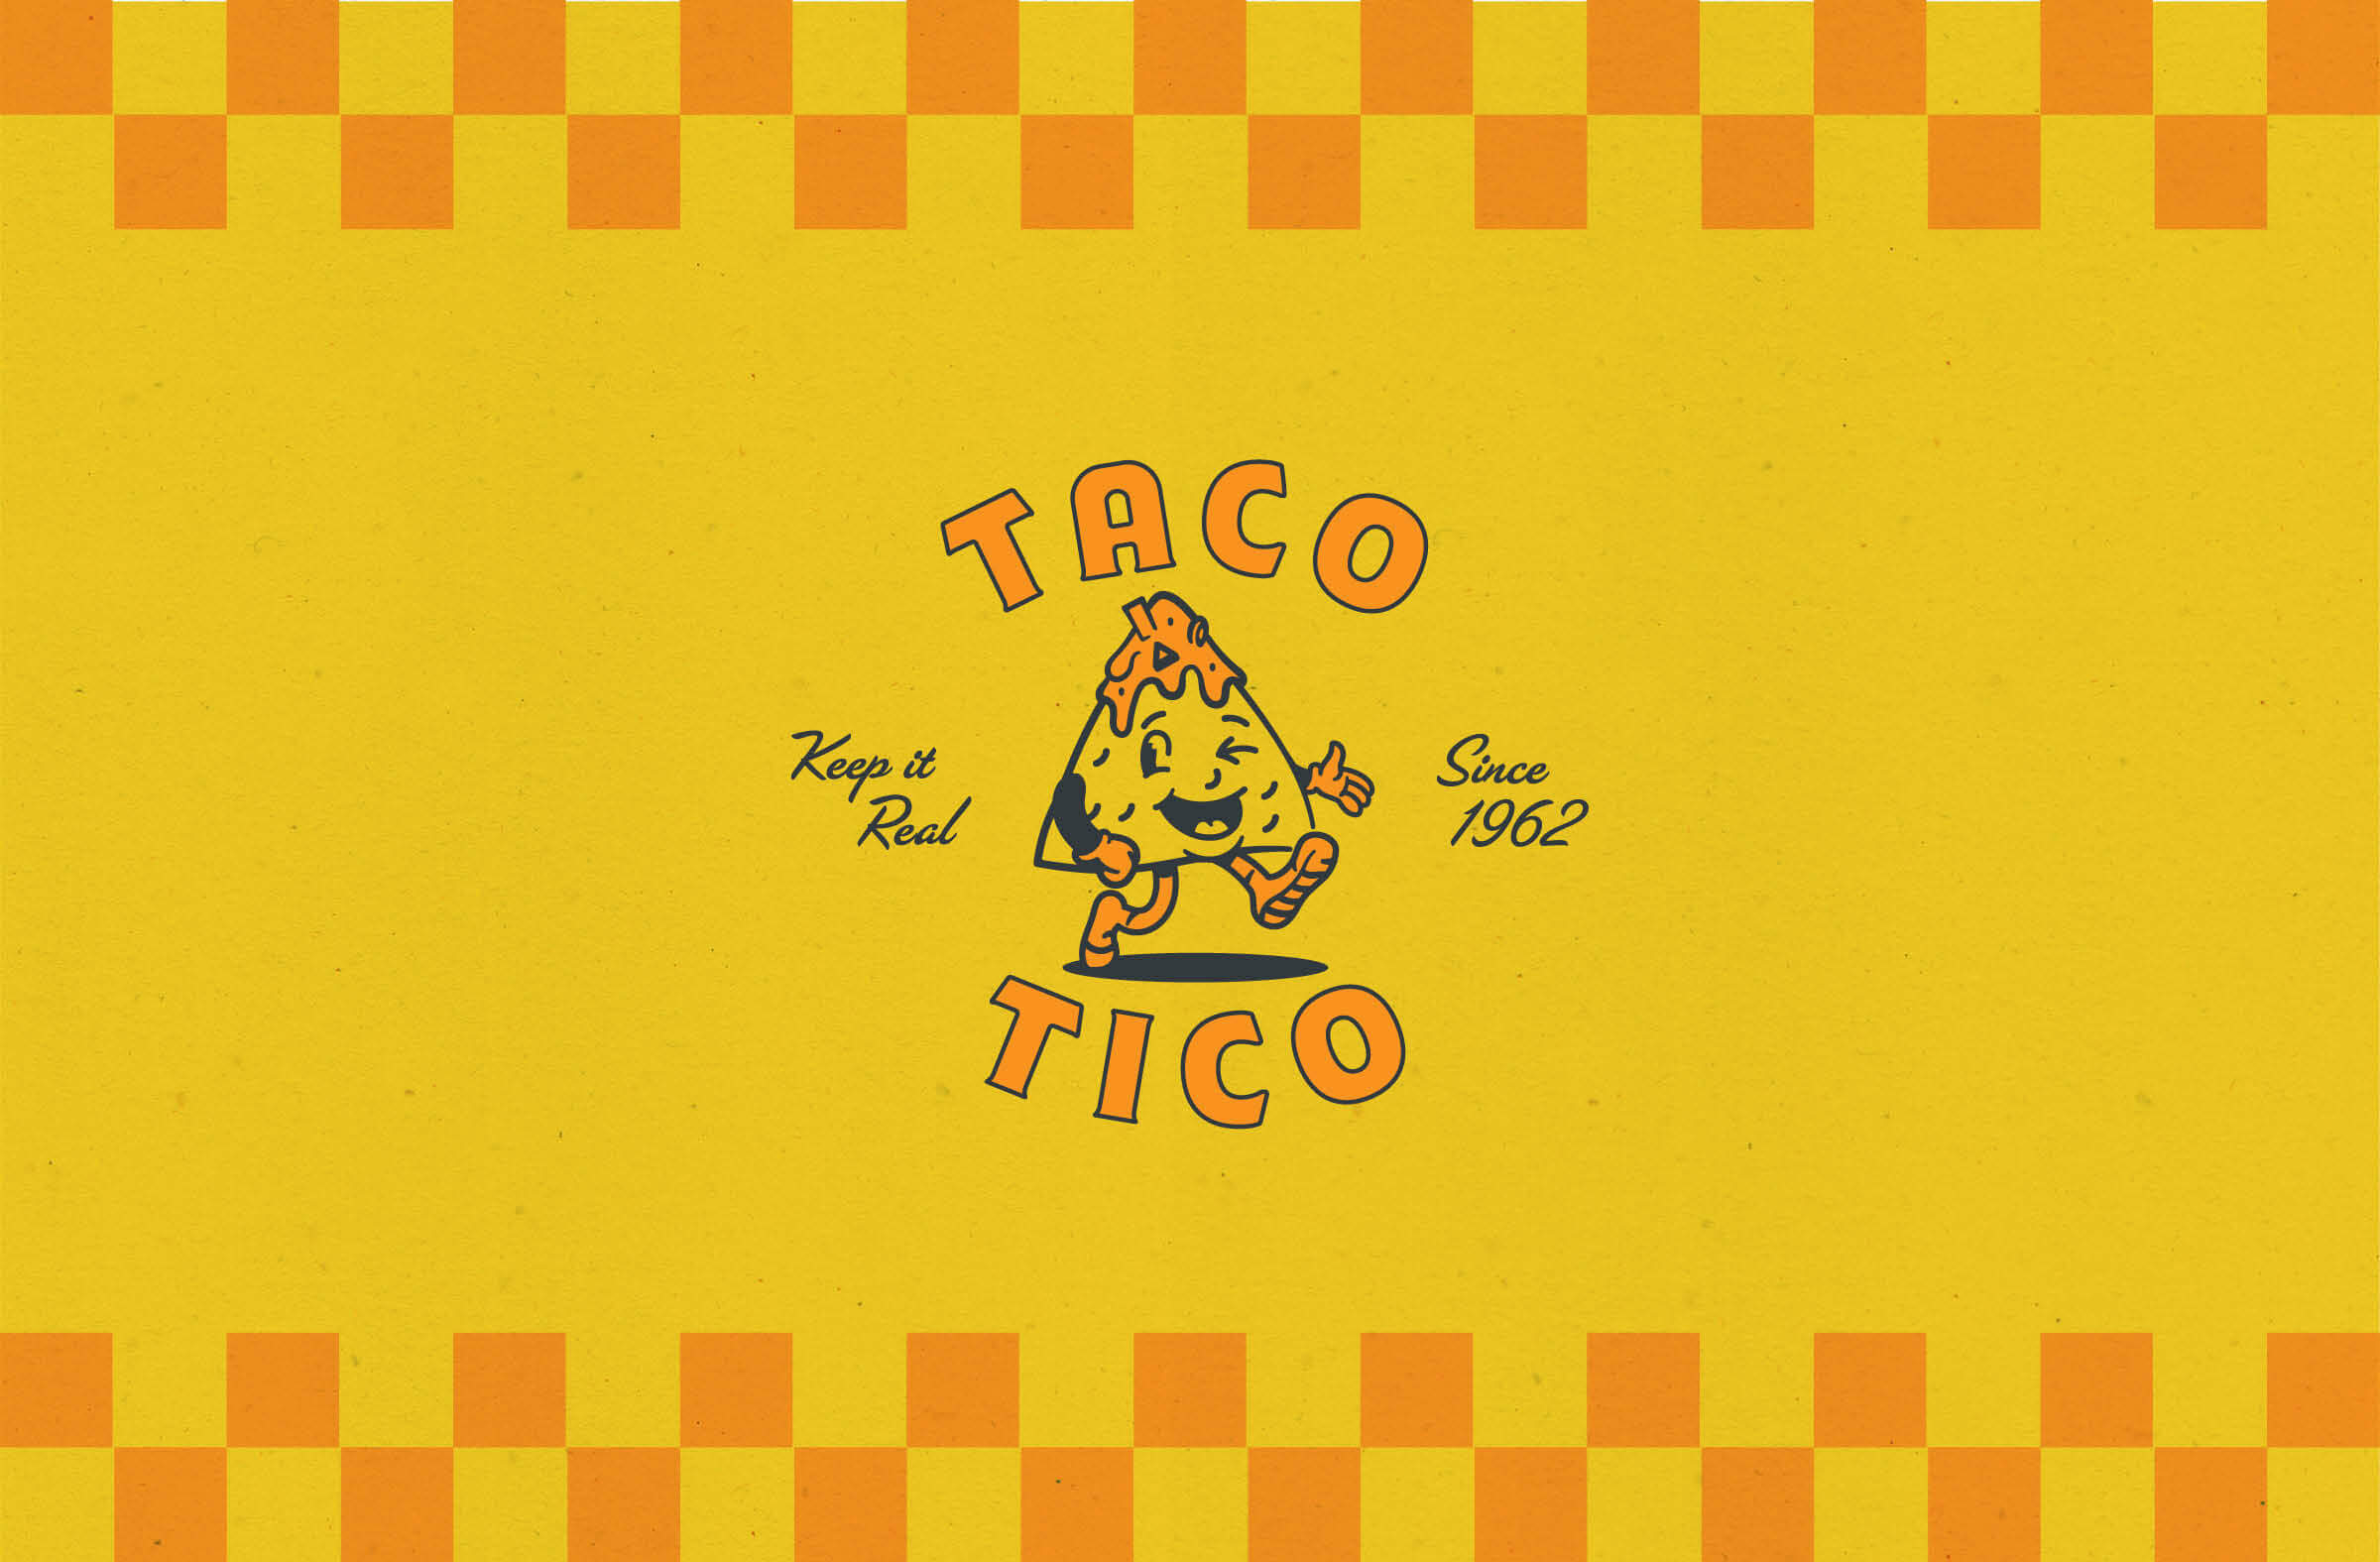 Taco Tico